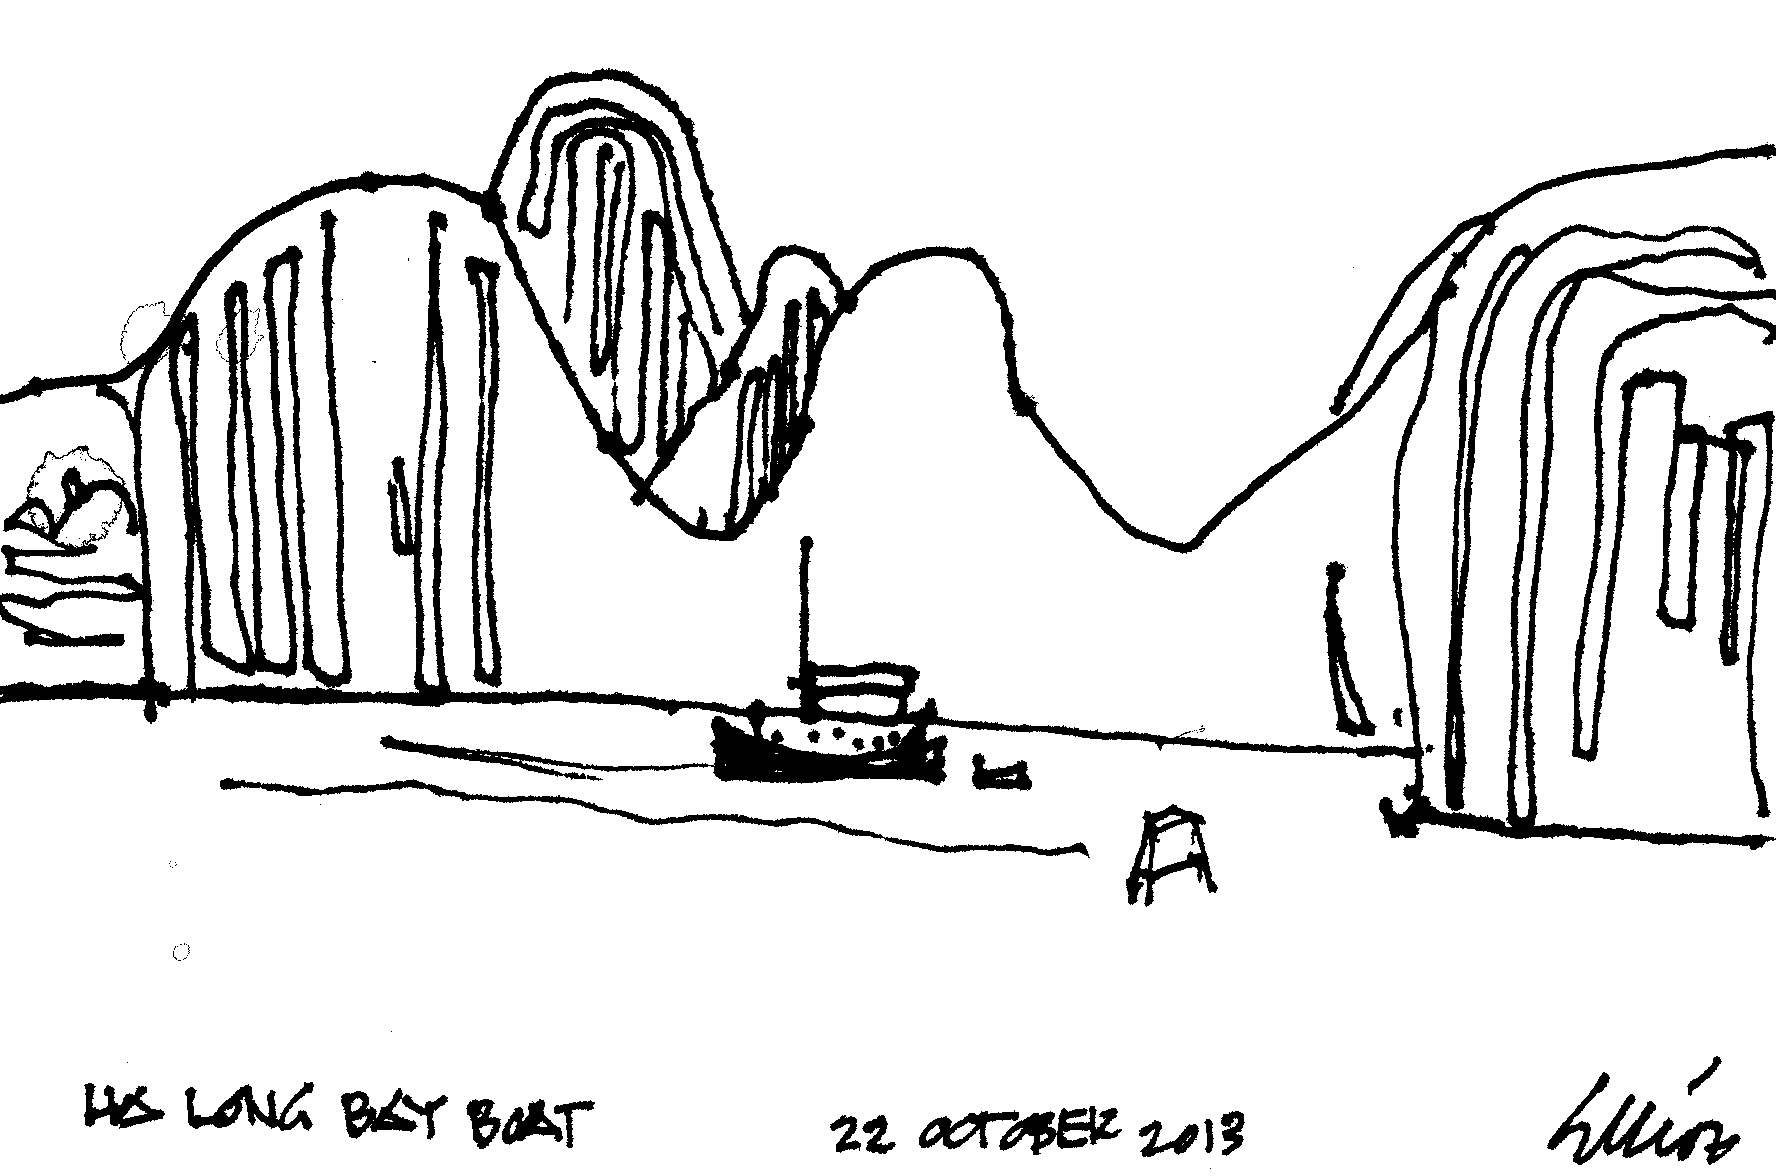  ha long bay boat 10.22.13 